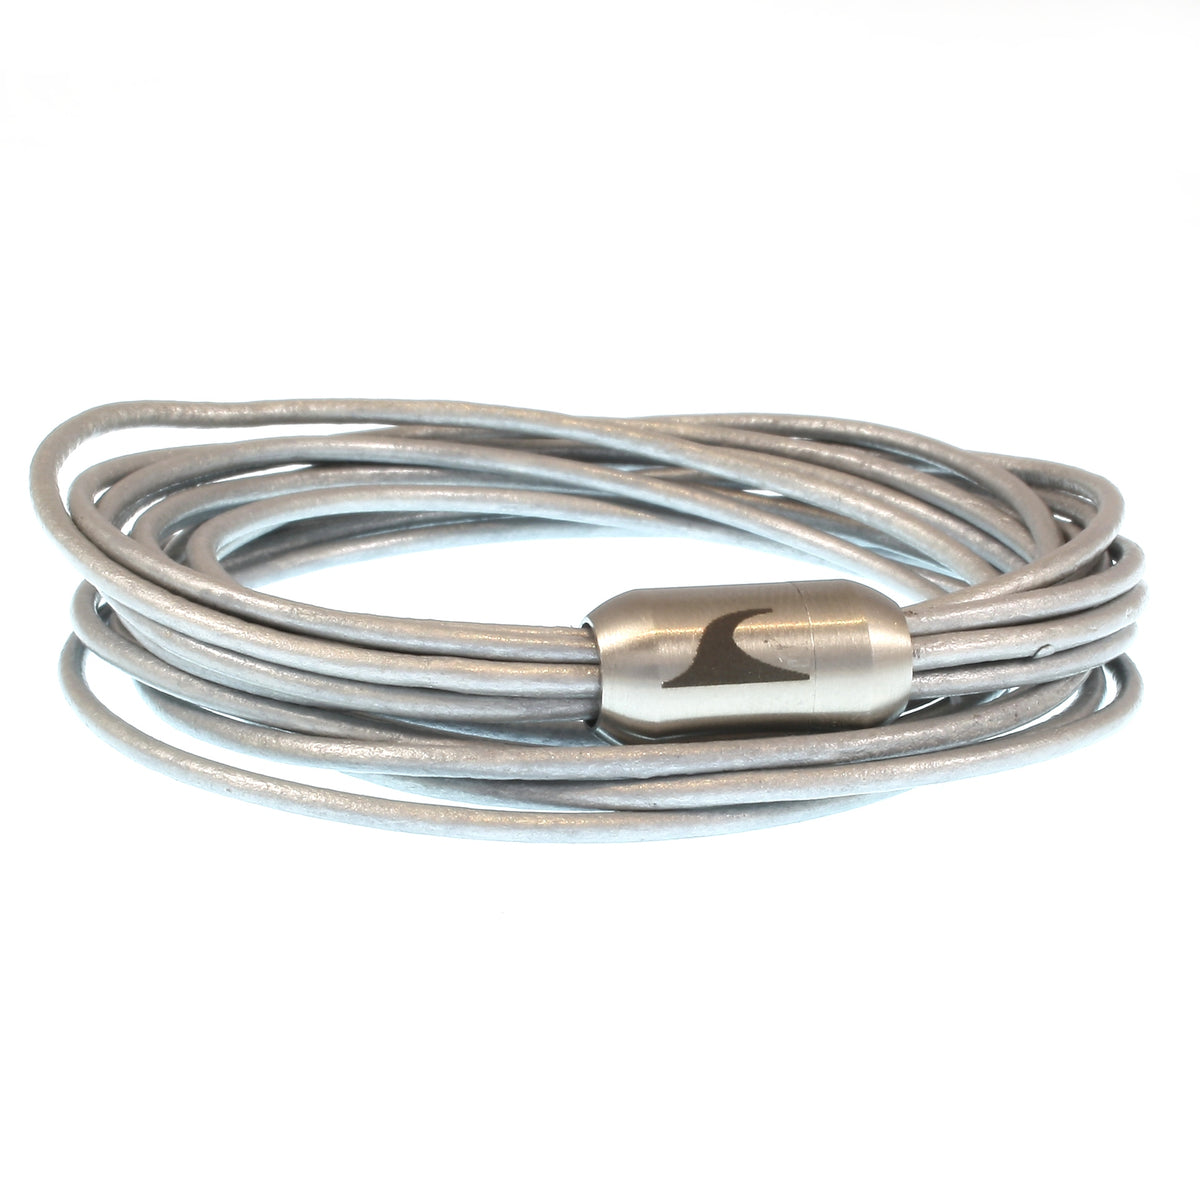 Damen-Leder-armband-fem2-silber-Edelstahlverschluss-vorn-wavepirate-shop-r